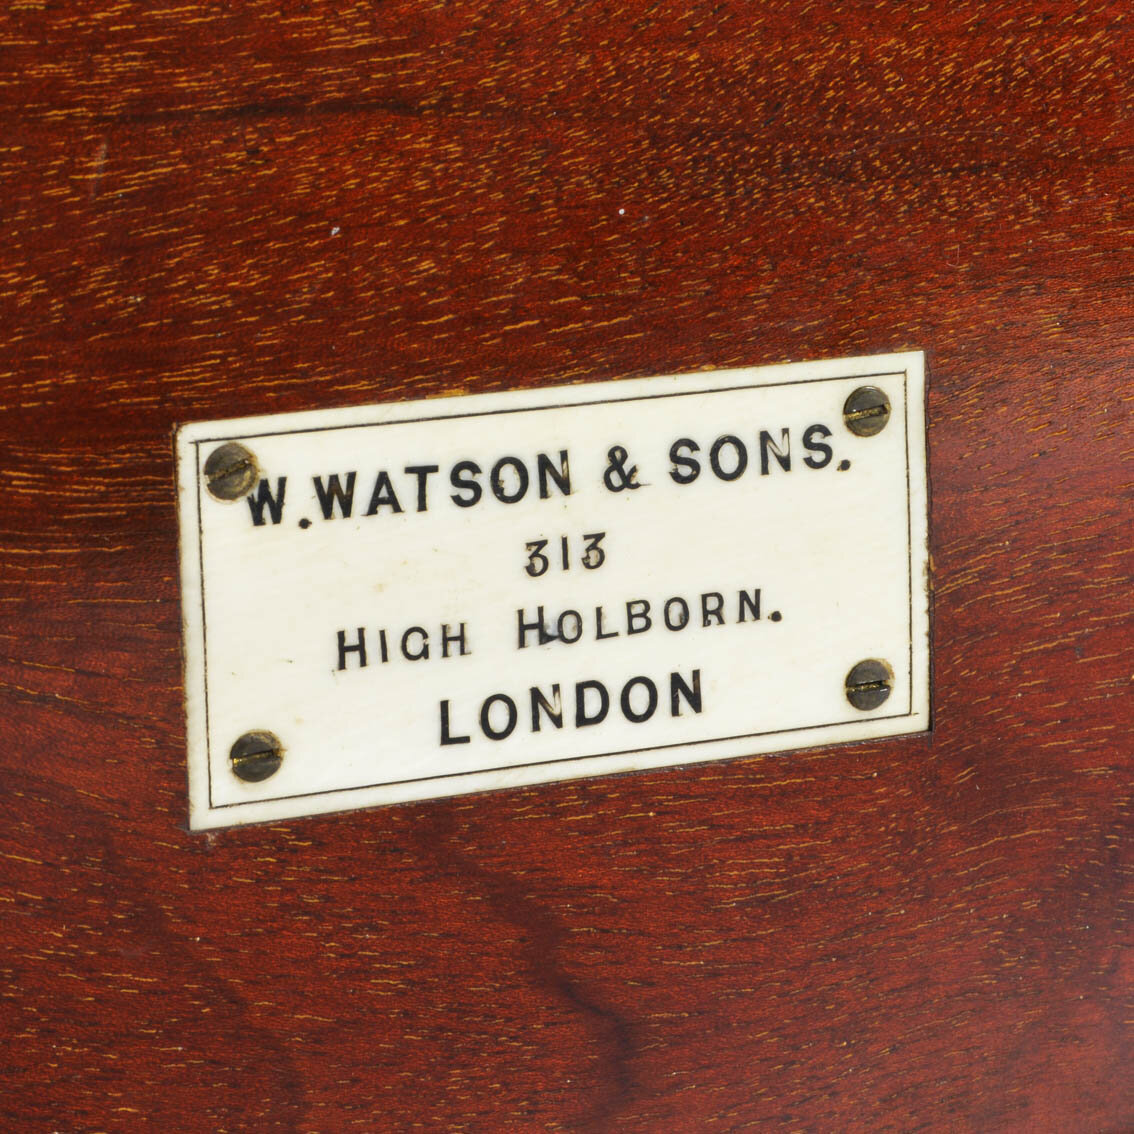 Watson 'Premier' 10 x 8 Tailboard Camera, circa 1900